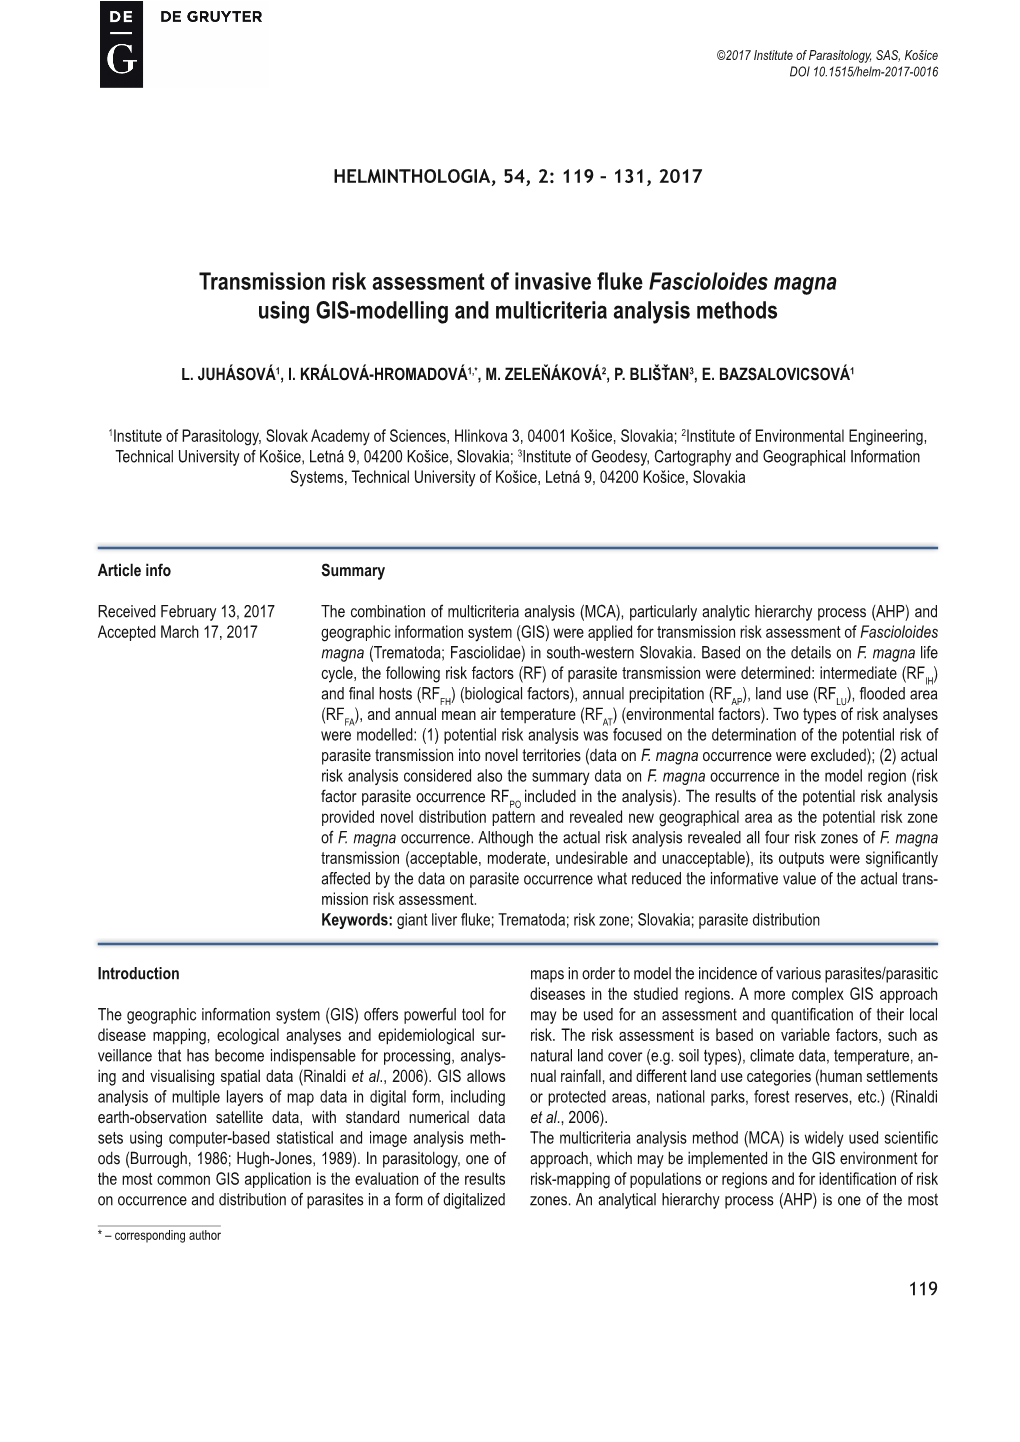 Transmission Risk Assessment of Invasive Fluke Fascioloides Magna